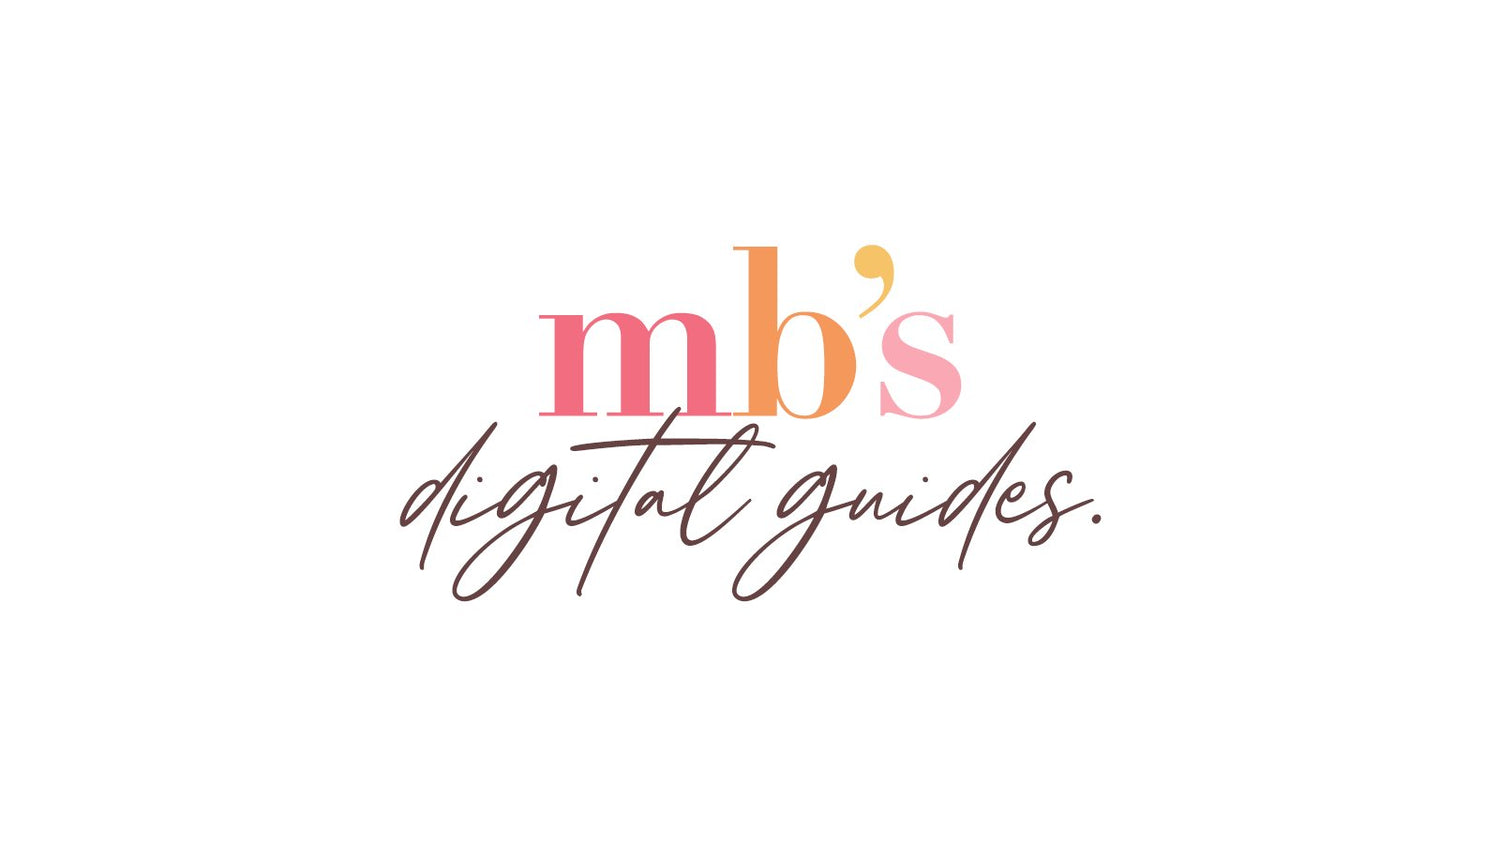 mb's digital guides.